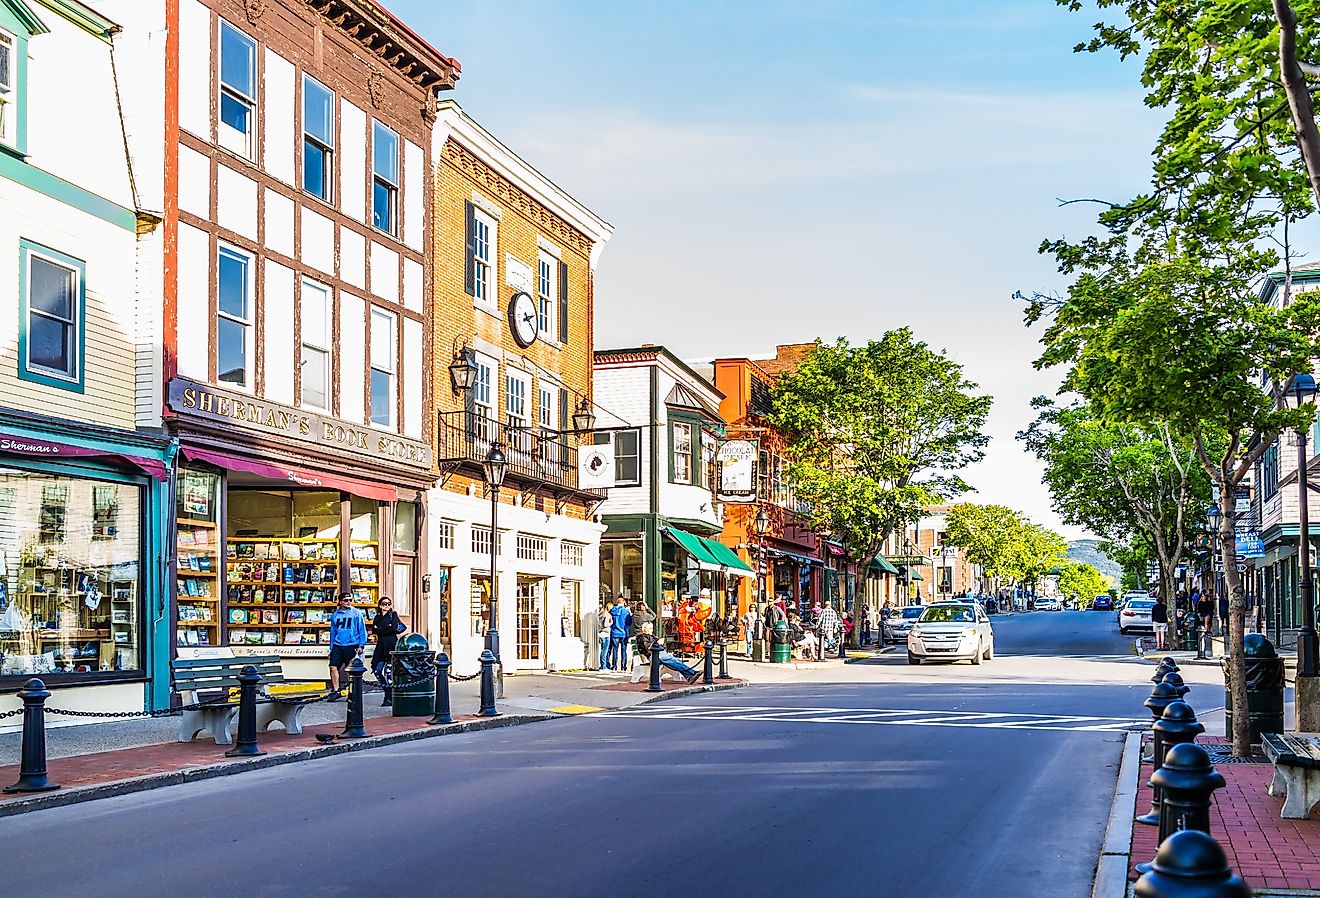 Main street in downtown Bar Harbor, Maine. Image credit Kristi Blokhin via Shutterstock